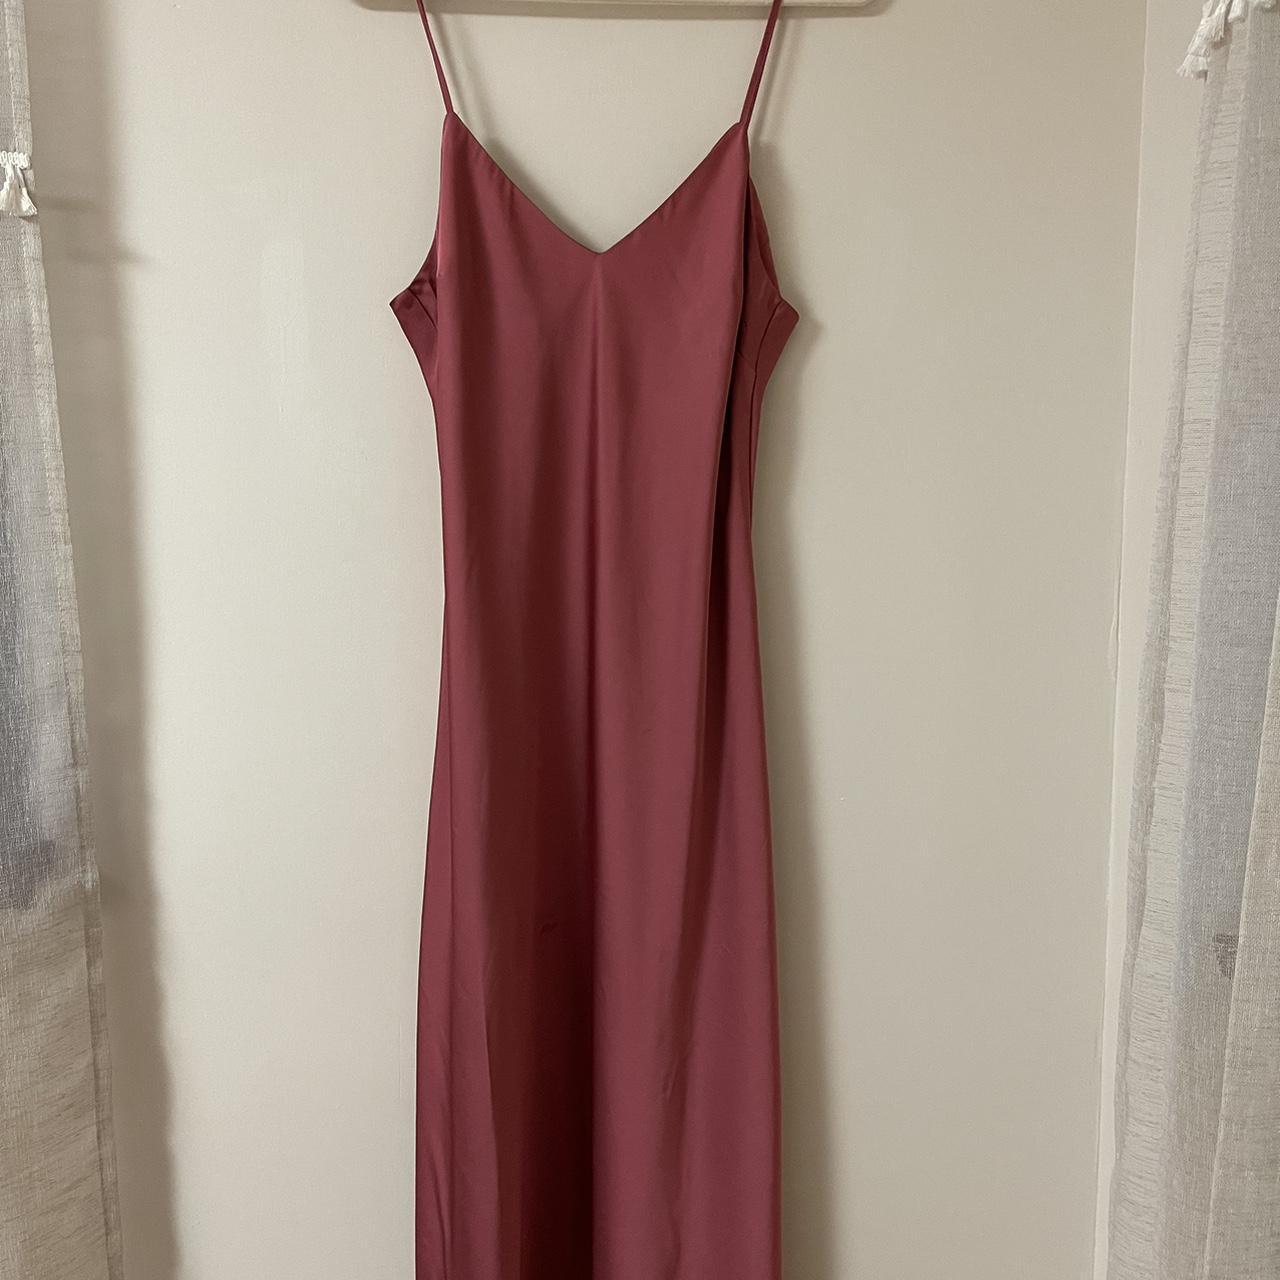 mauve/pink satin slip dress 💐 only worn once, size... - Depop